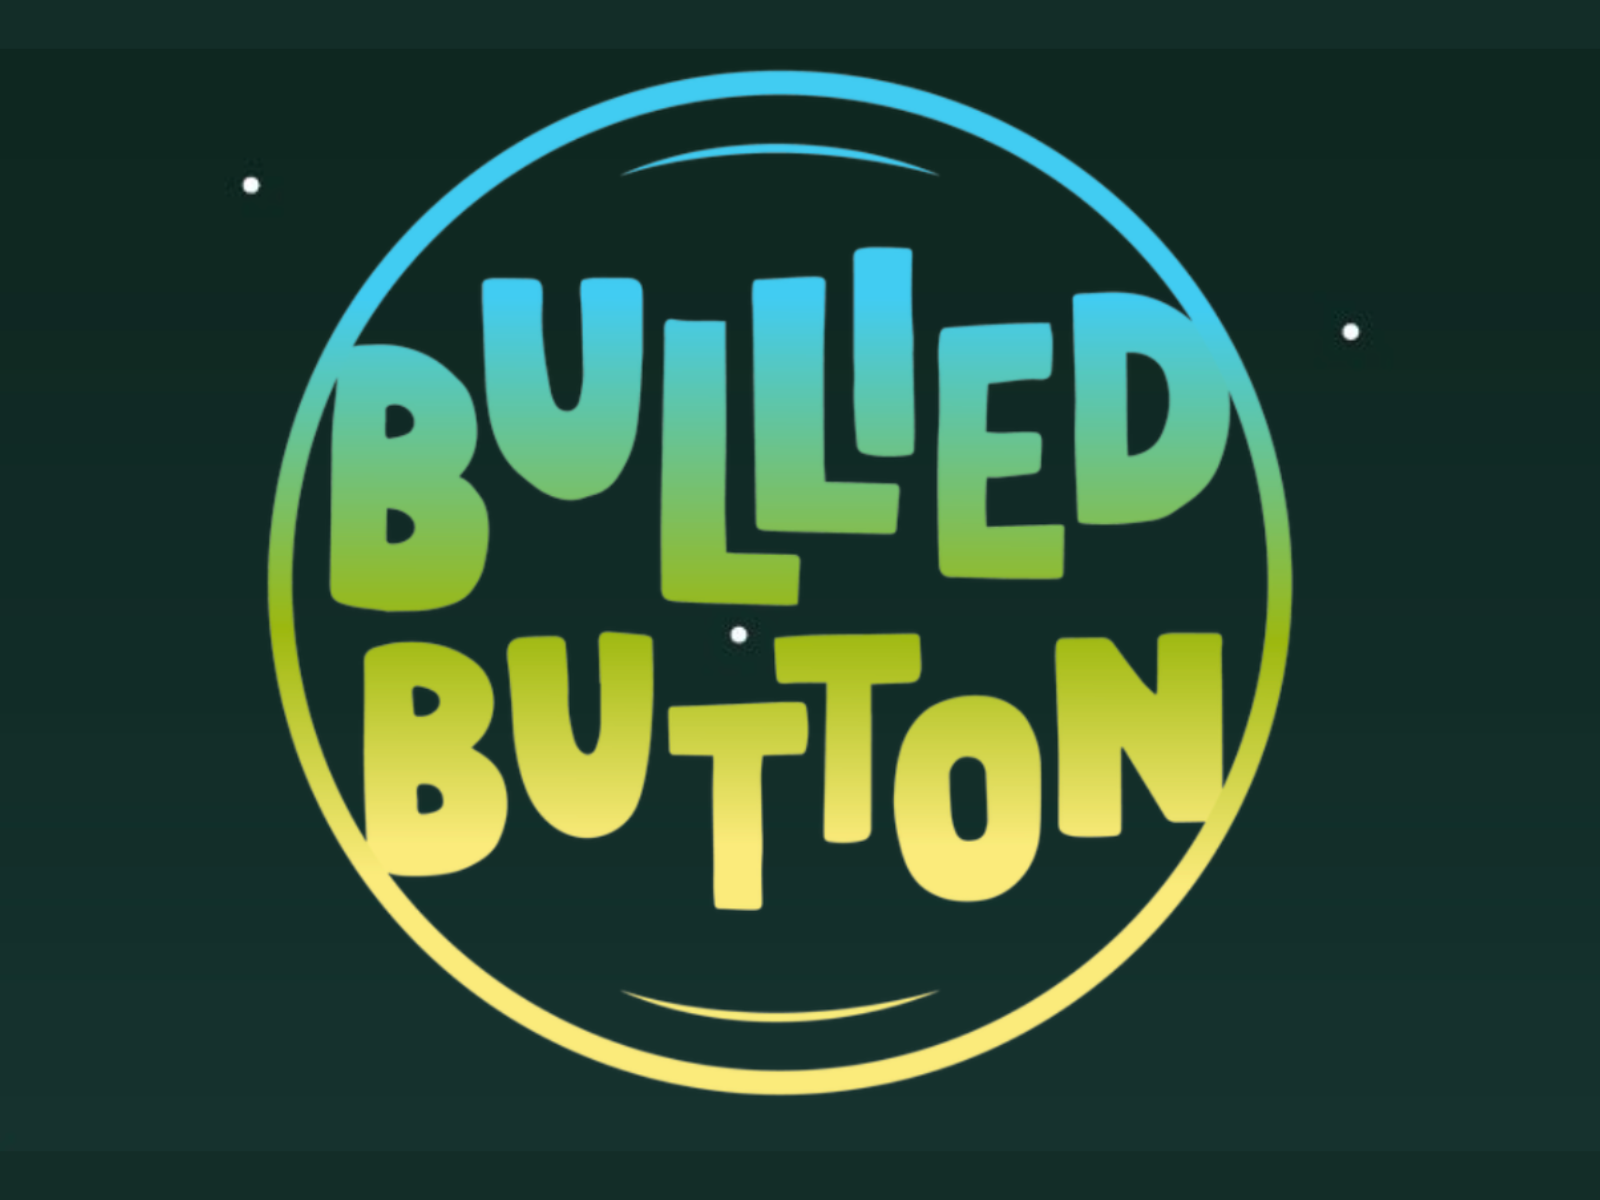 Bullied Button